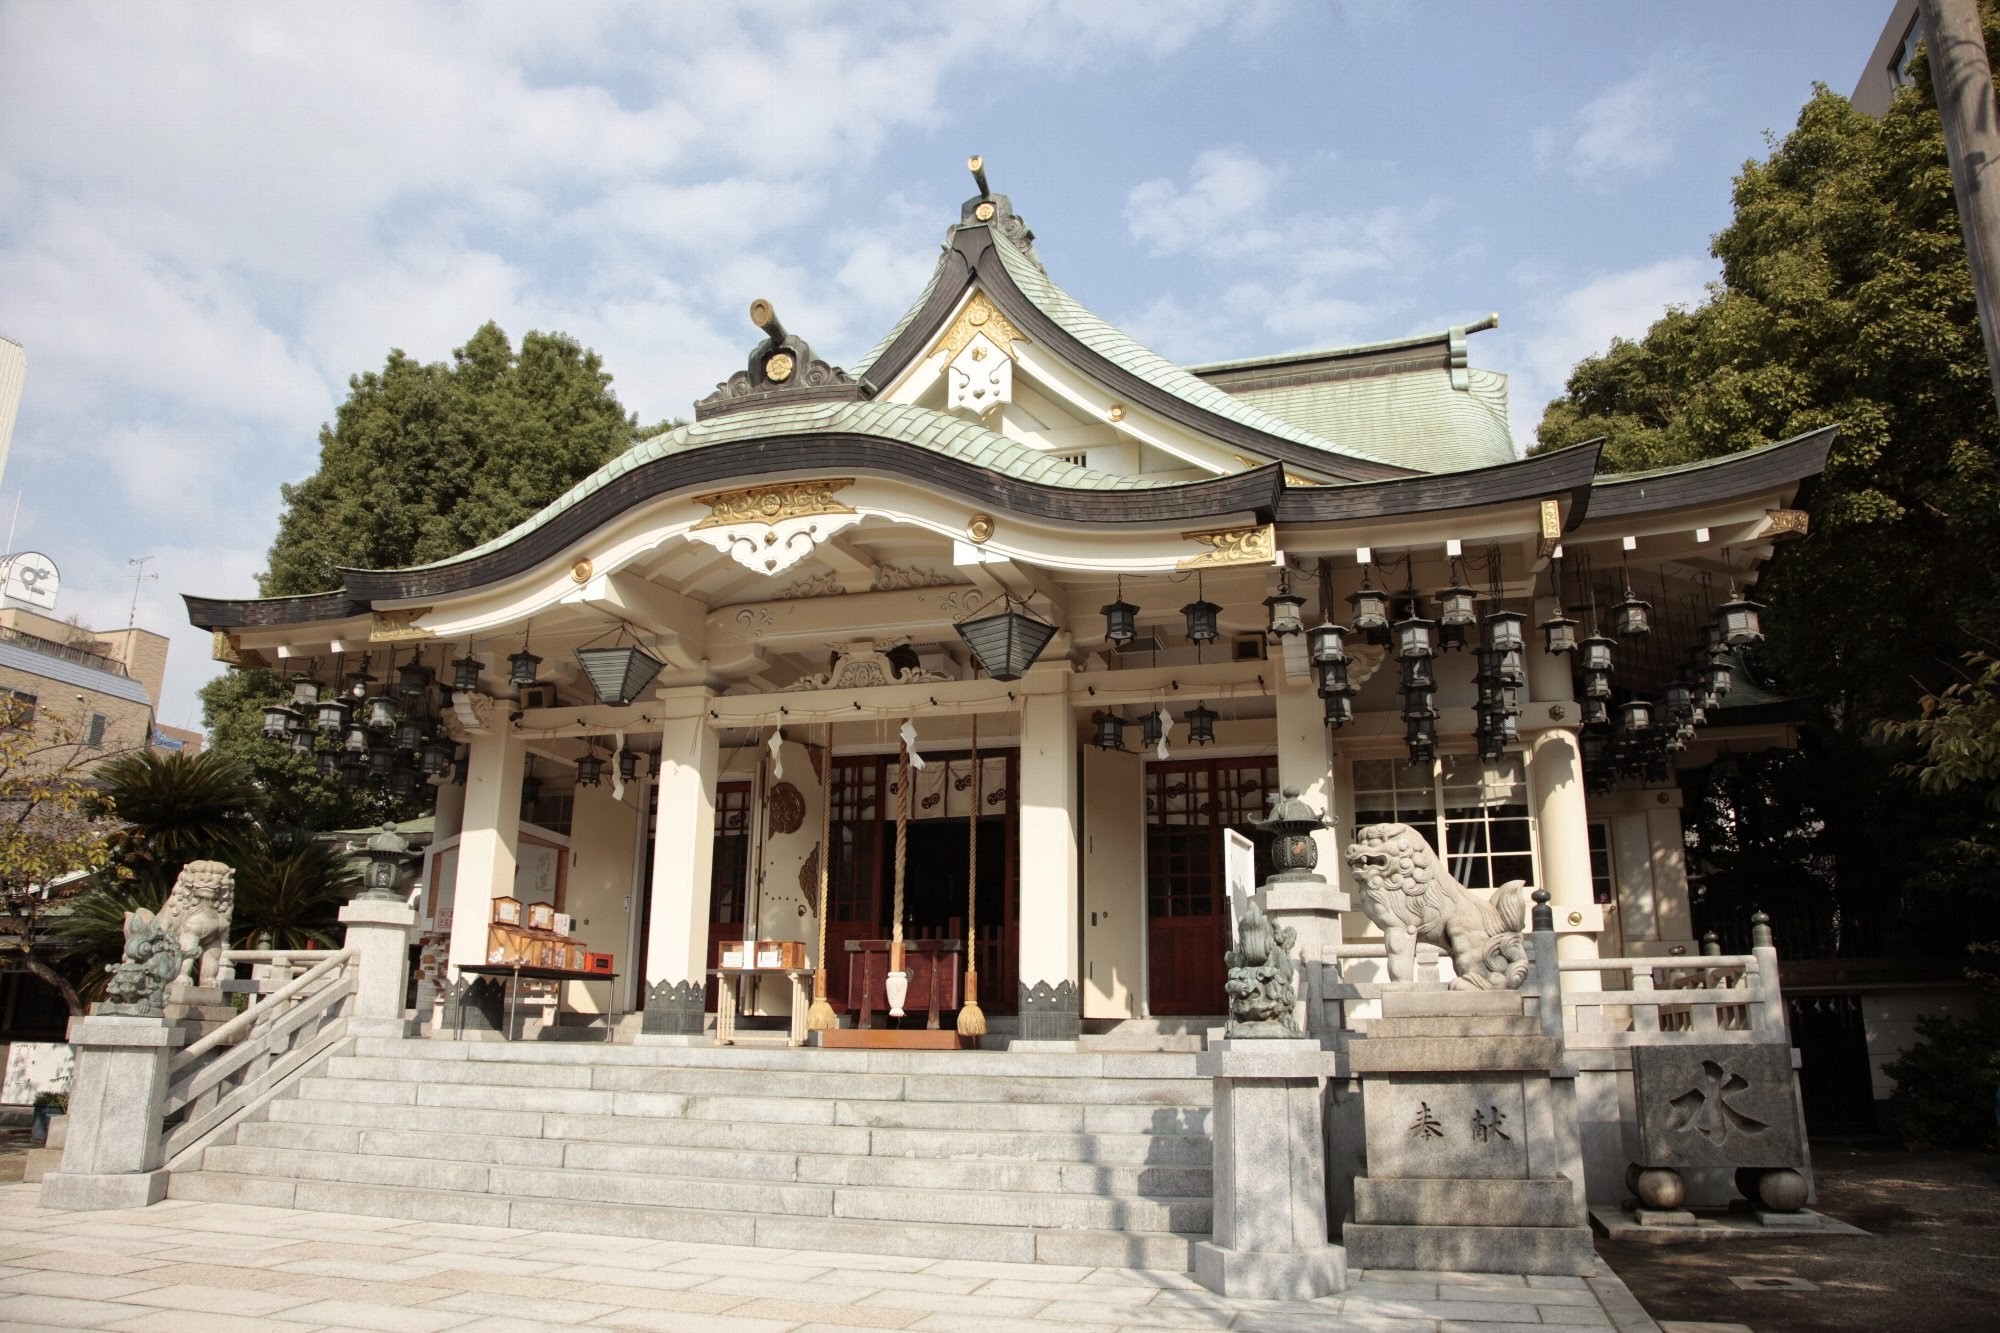 Namba Yasaka Shrine - Namba's Power Spot & Famous Tug-of-war Shinto Ritual